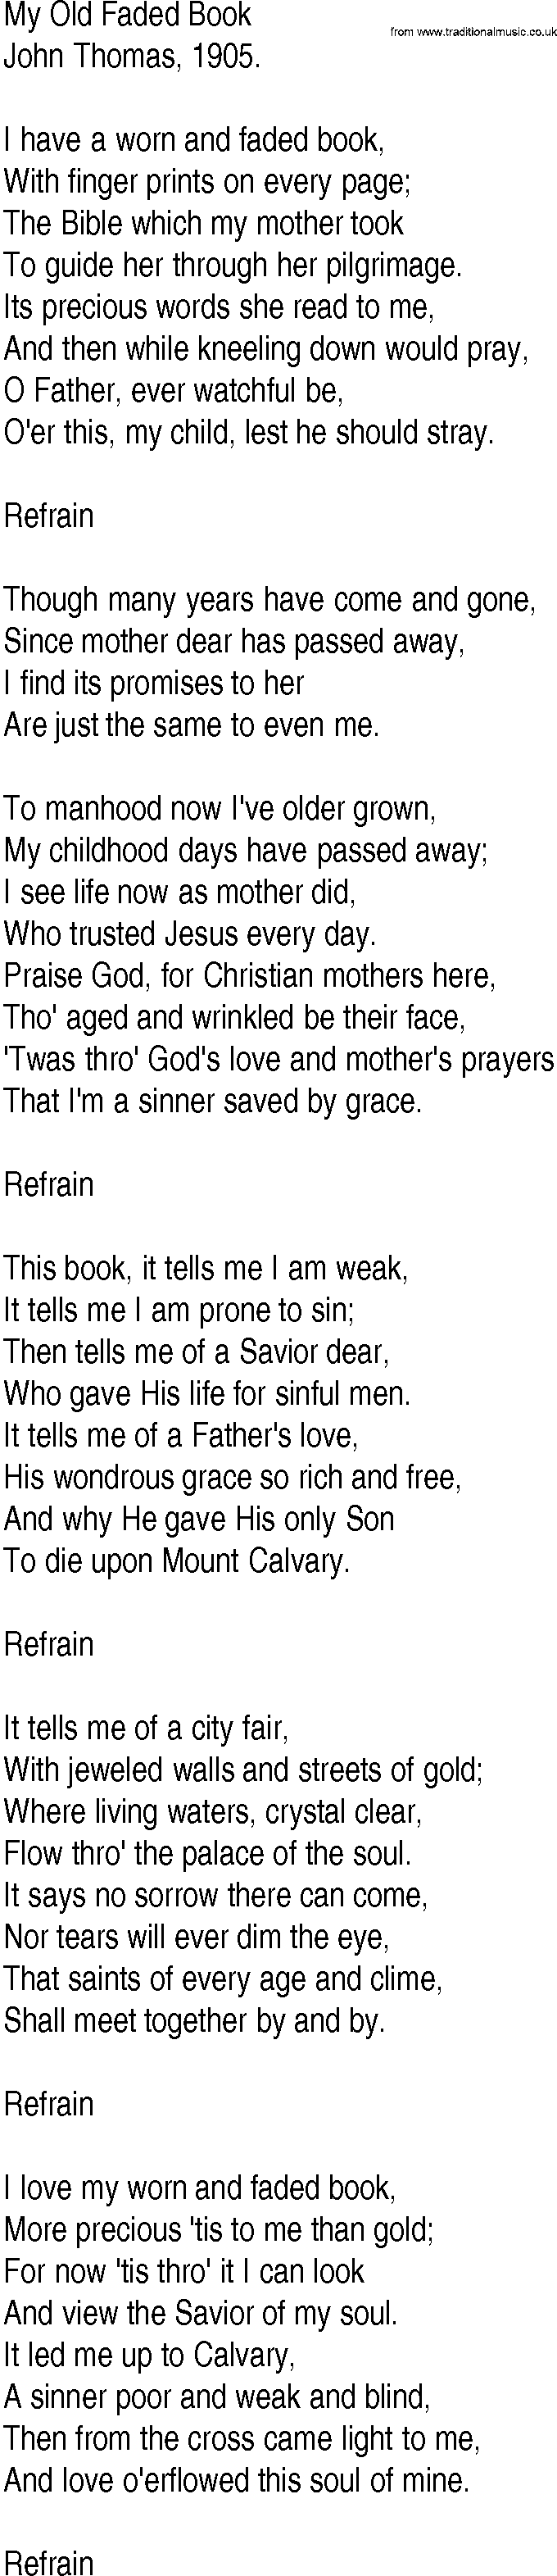 Hymn and Gospel Song: My Old Faded Book by John Thomas lyrics